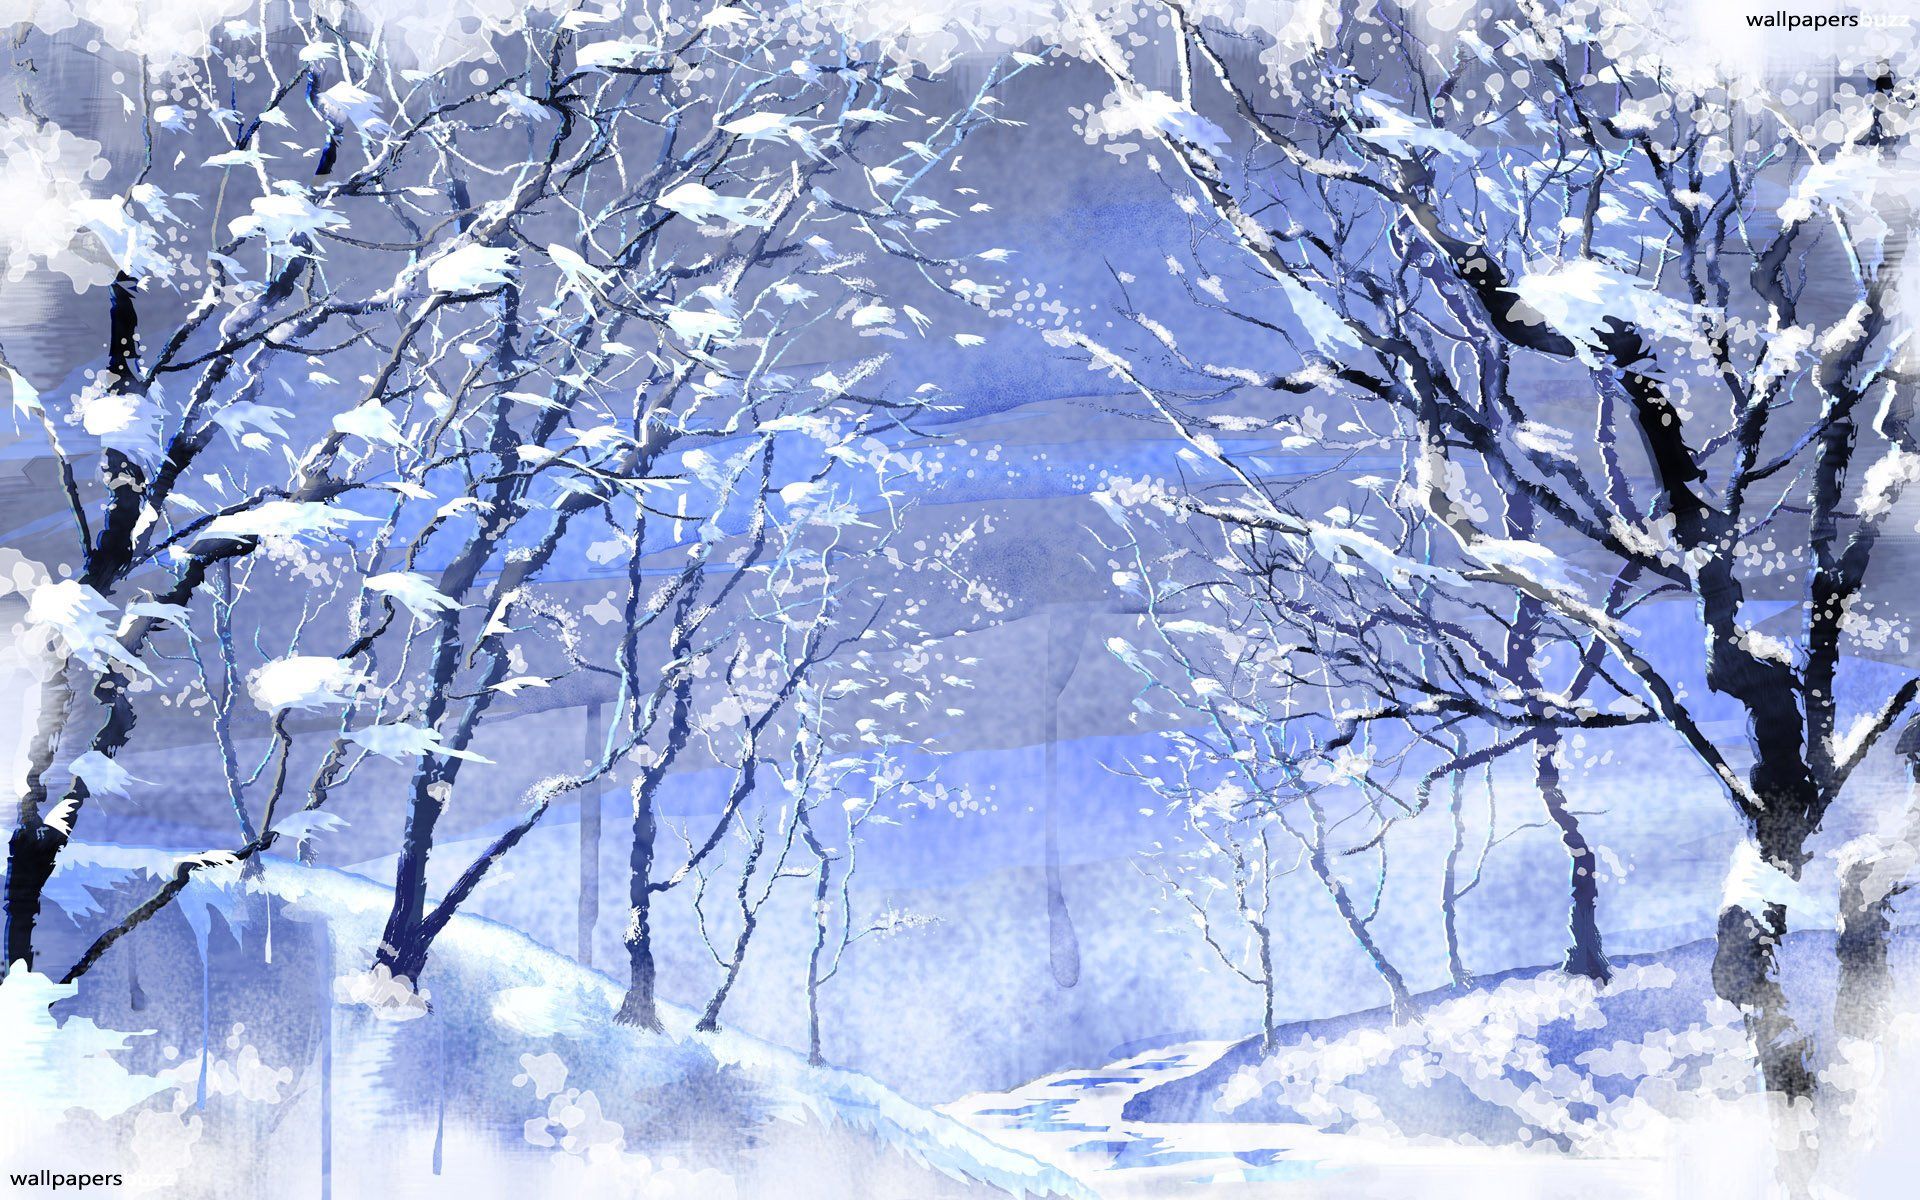 Snowy Anime Wallpaper Winter And Snow Wallpaper Pixelstalk Net 28 Best Wallpaper For Android Phones A. Winter wallpaper, Winter snow wallpaper, Winter scenery